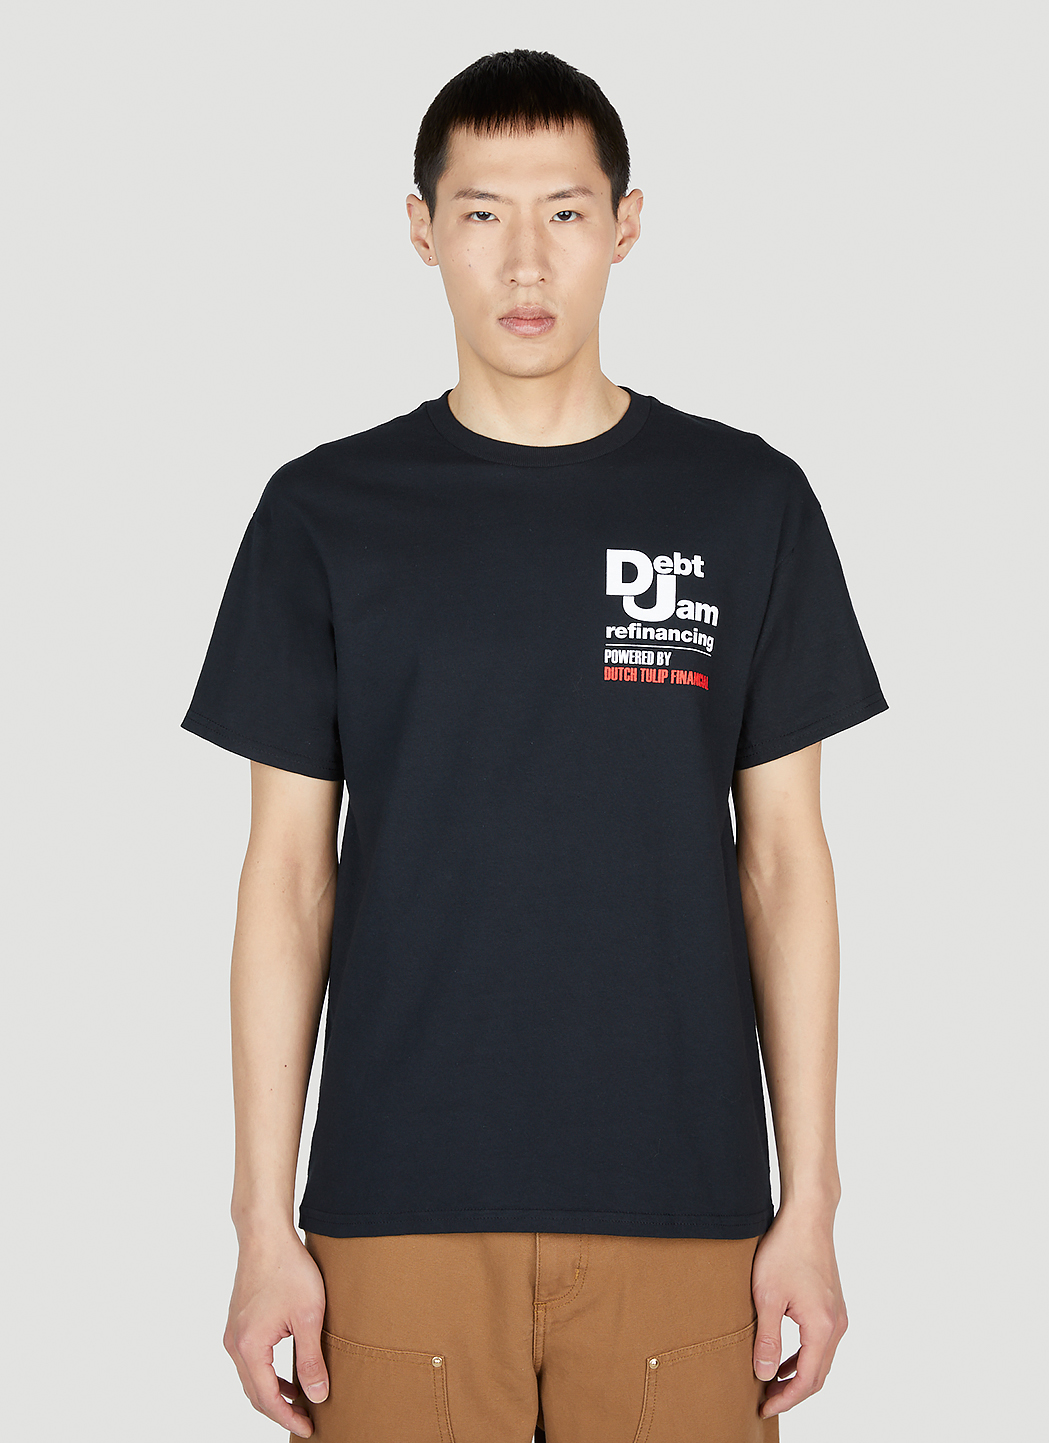 Debt Jam Short-Sleeved T-shirt